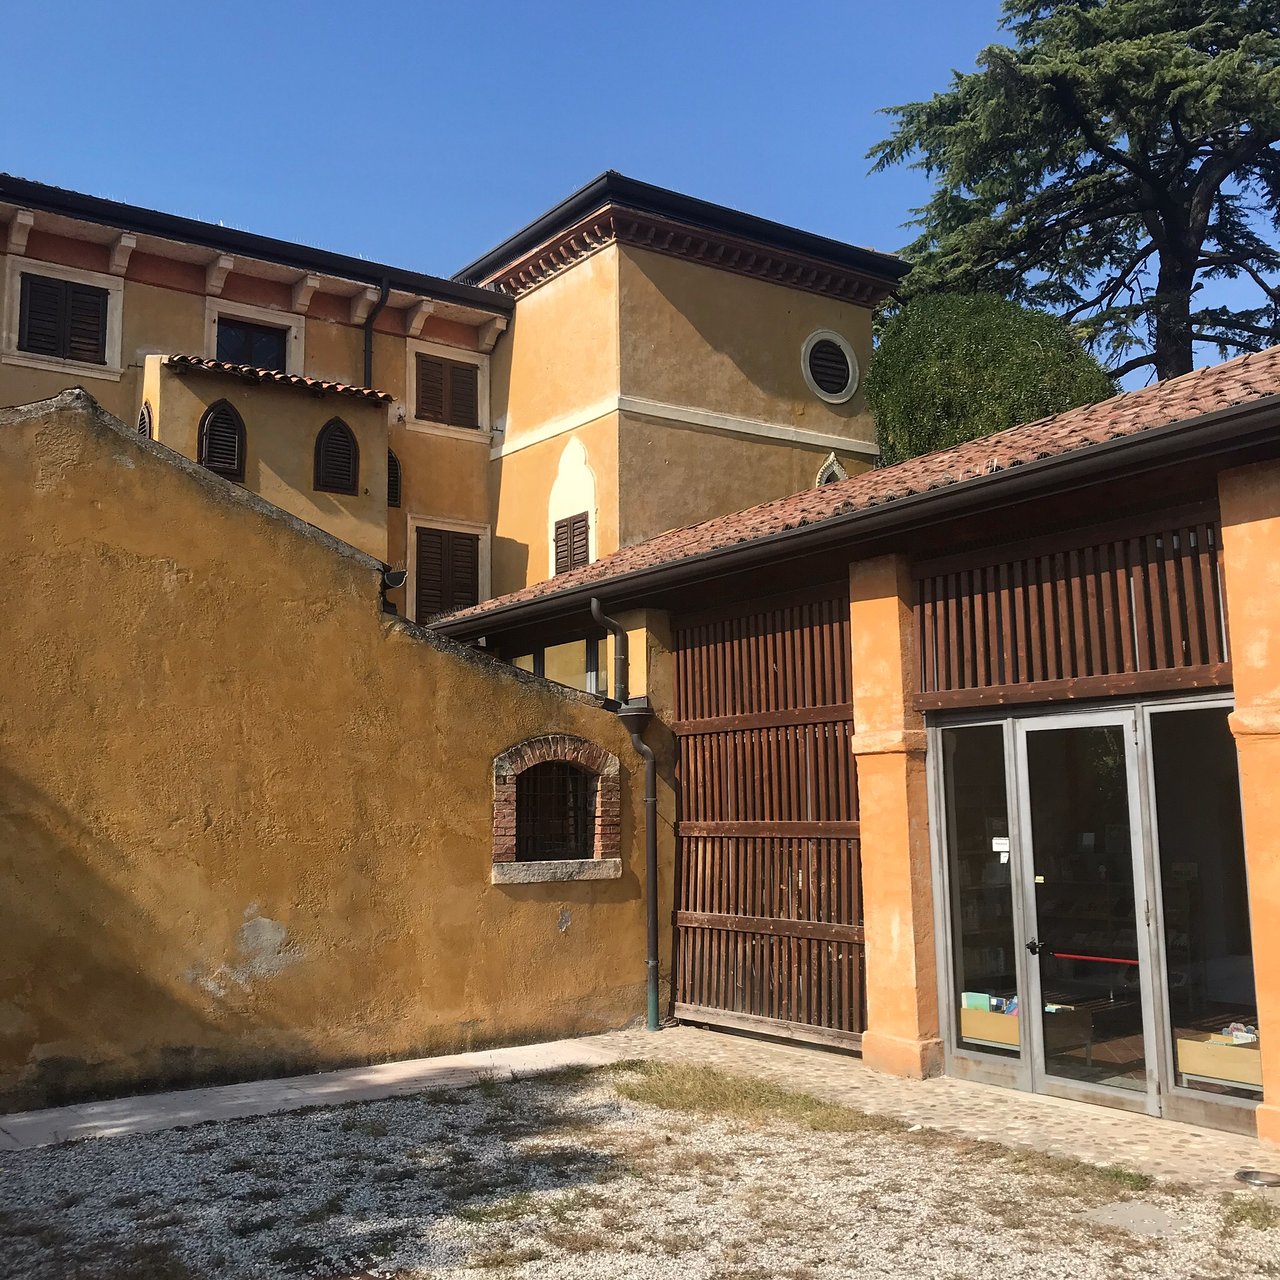 Villa Ciresola - Biblioteca Comunale Galileo Galilei